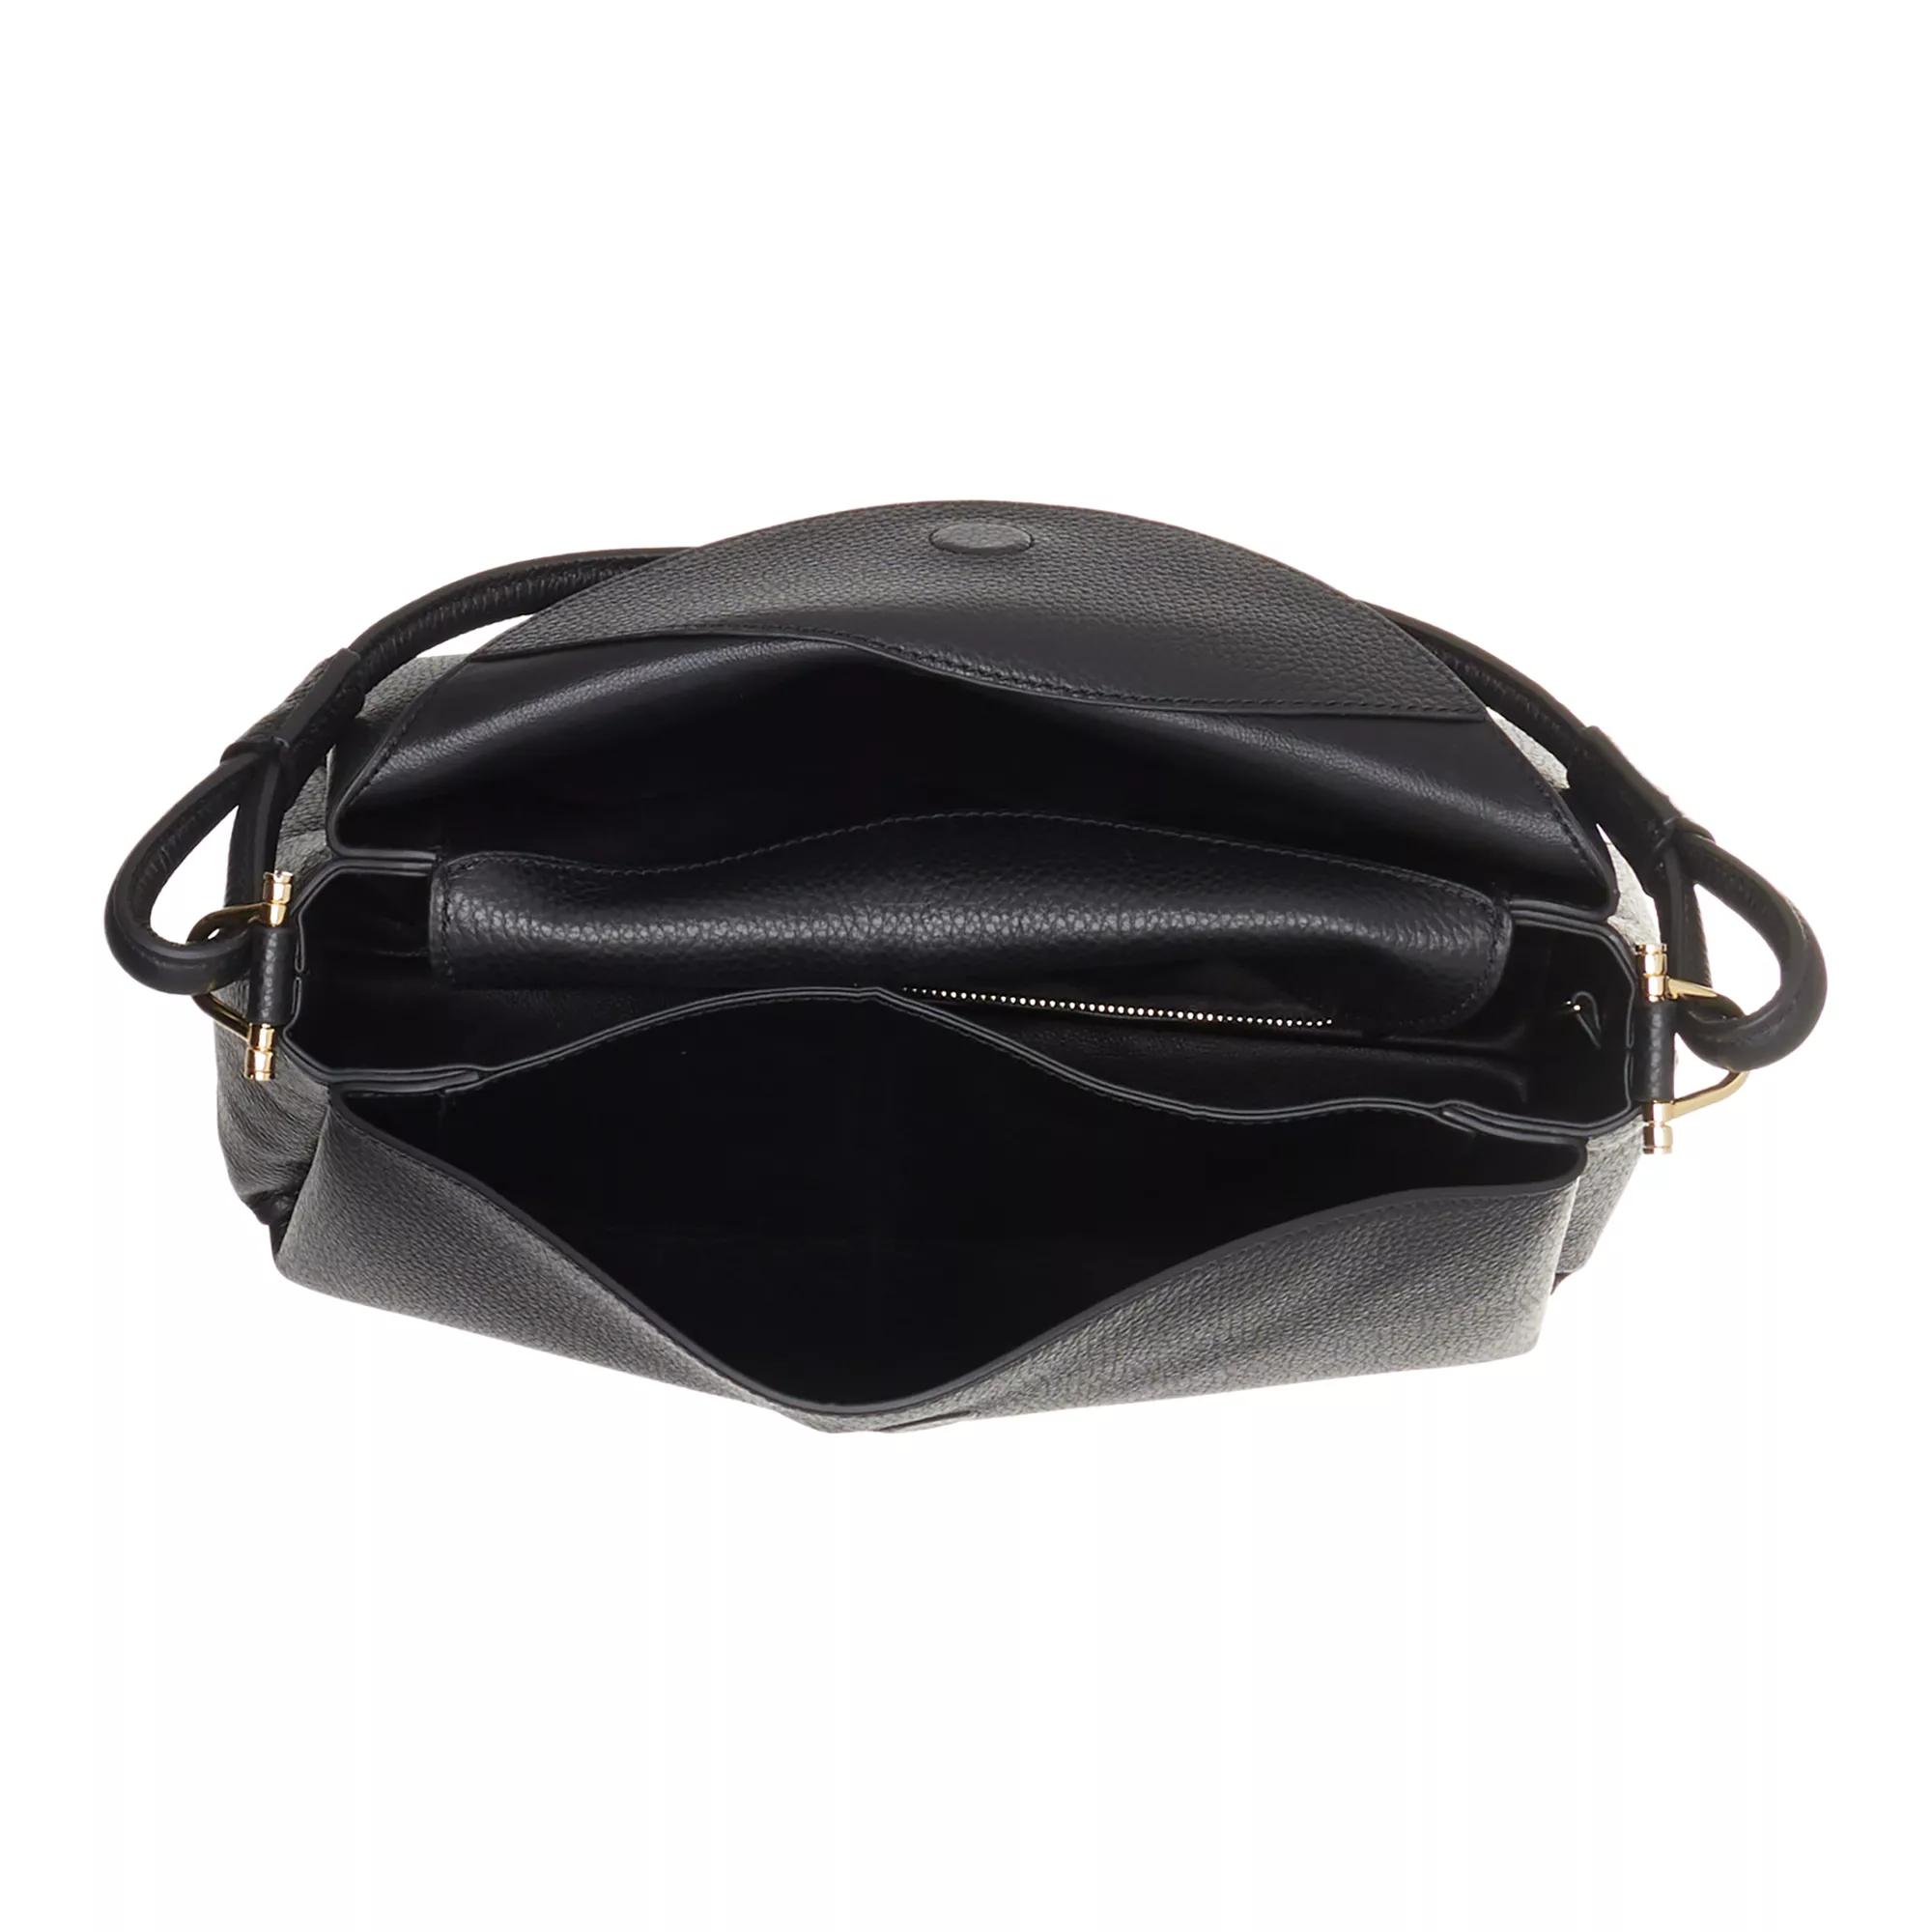 Coccinelle Satchels Eclyps Handbag in zwart